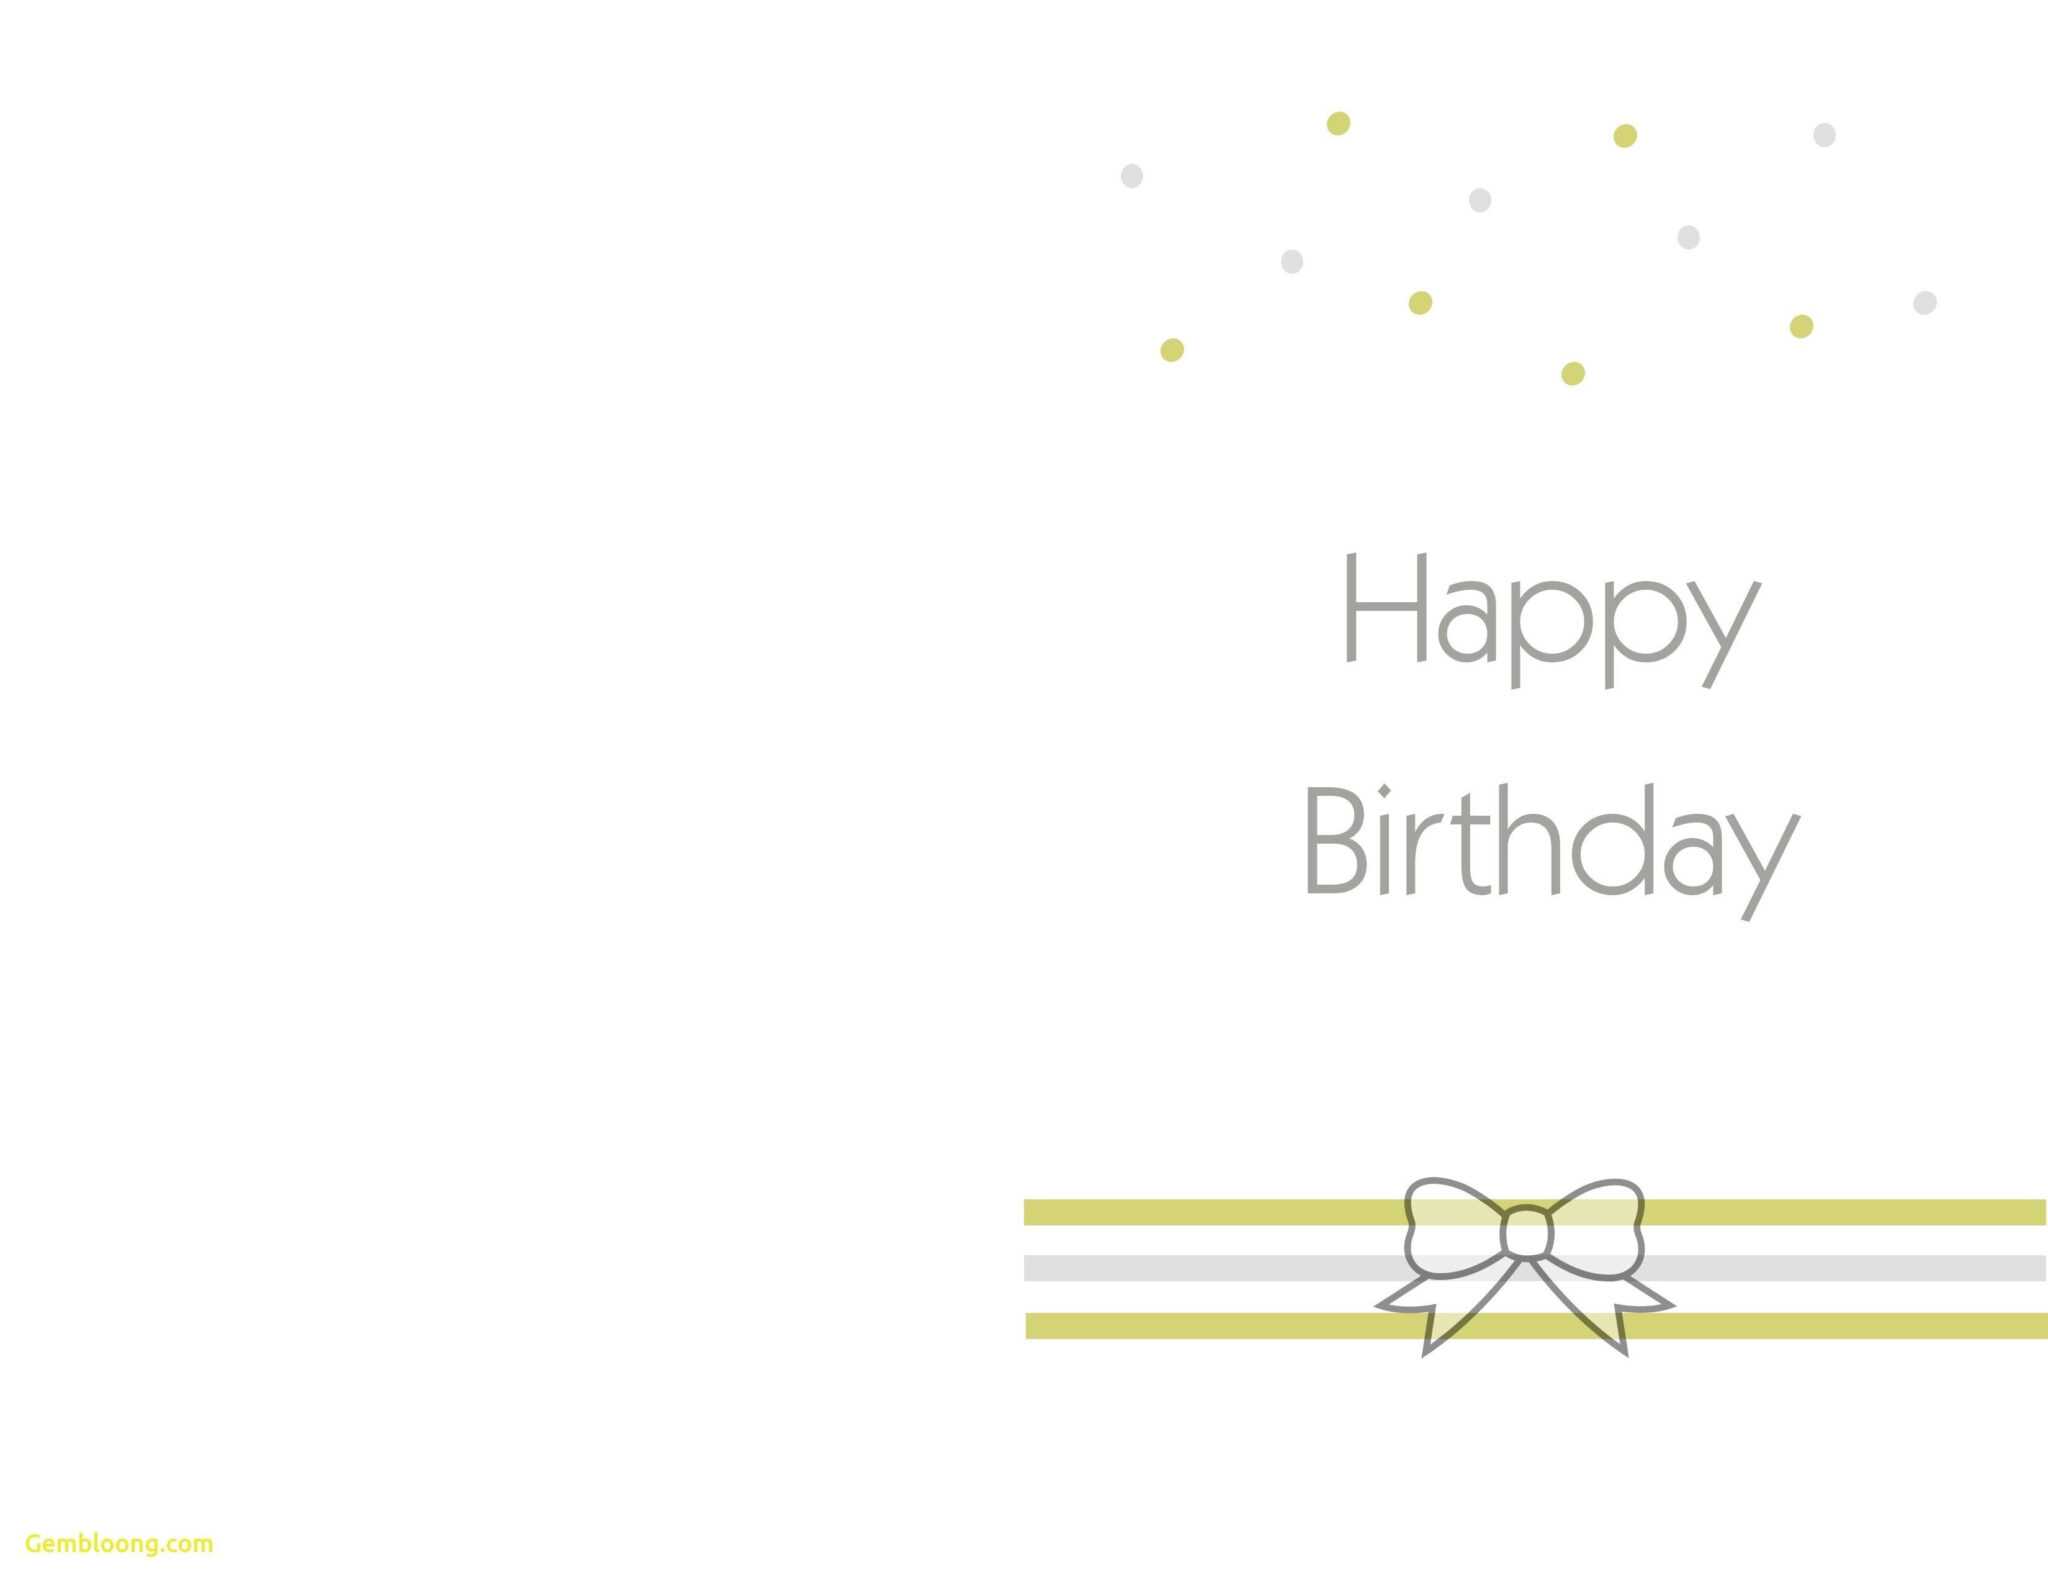 Foldable Birthday Card Template